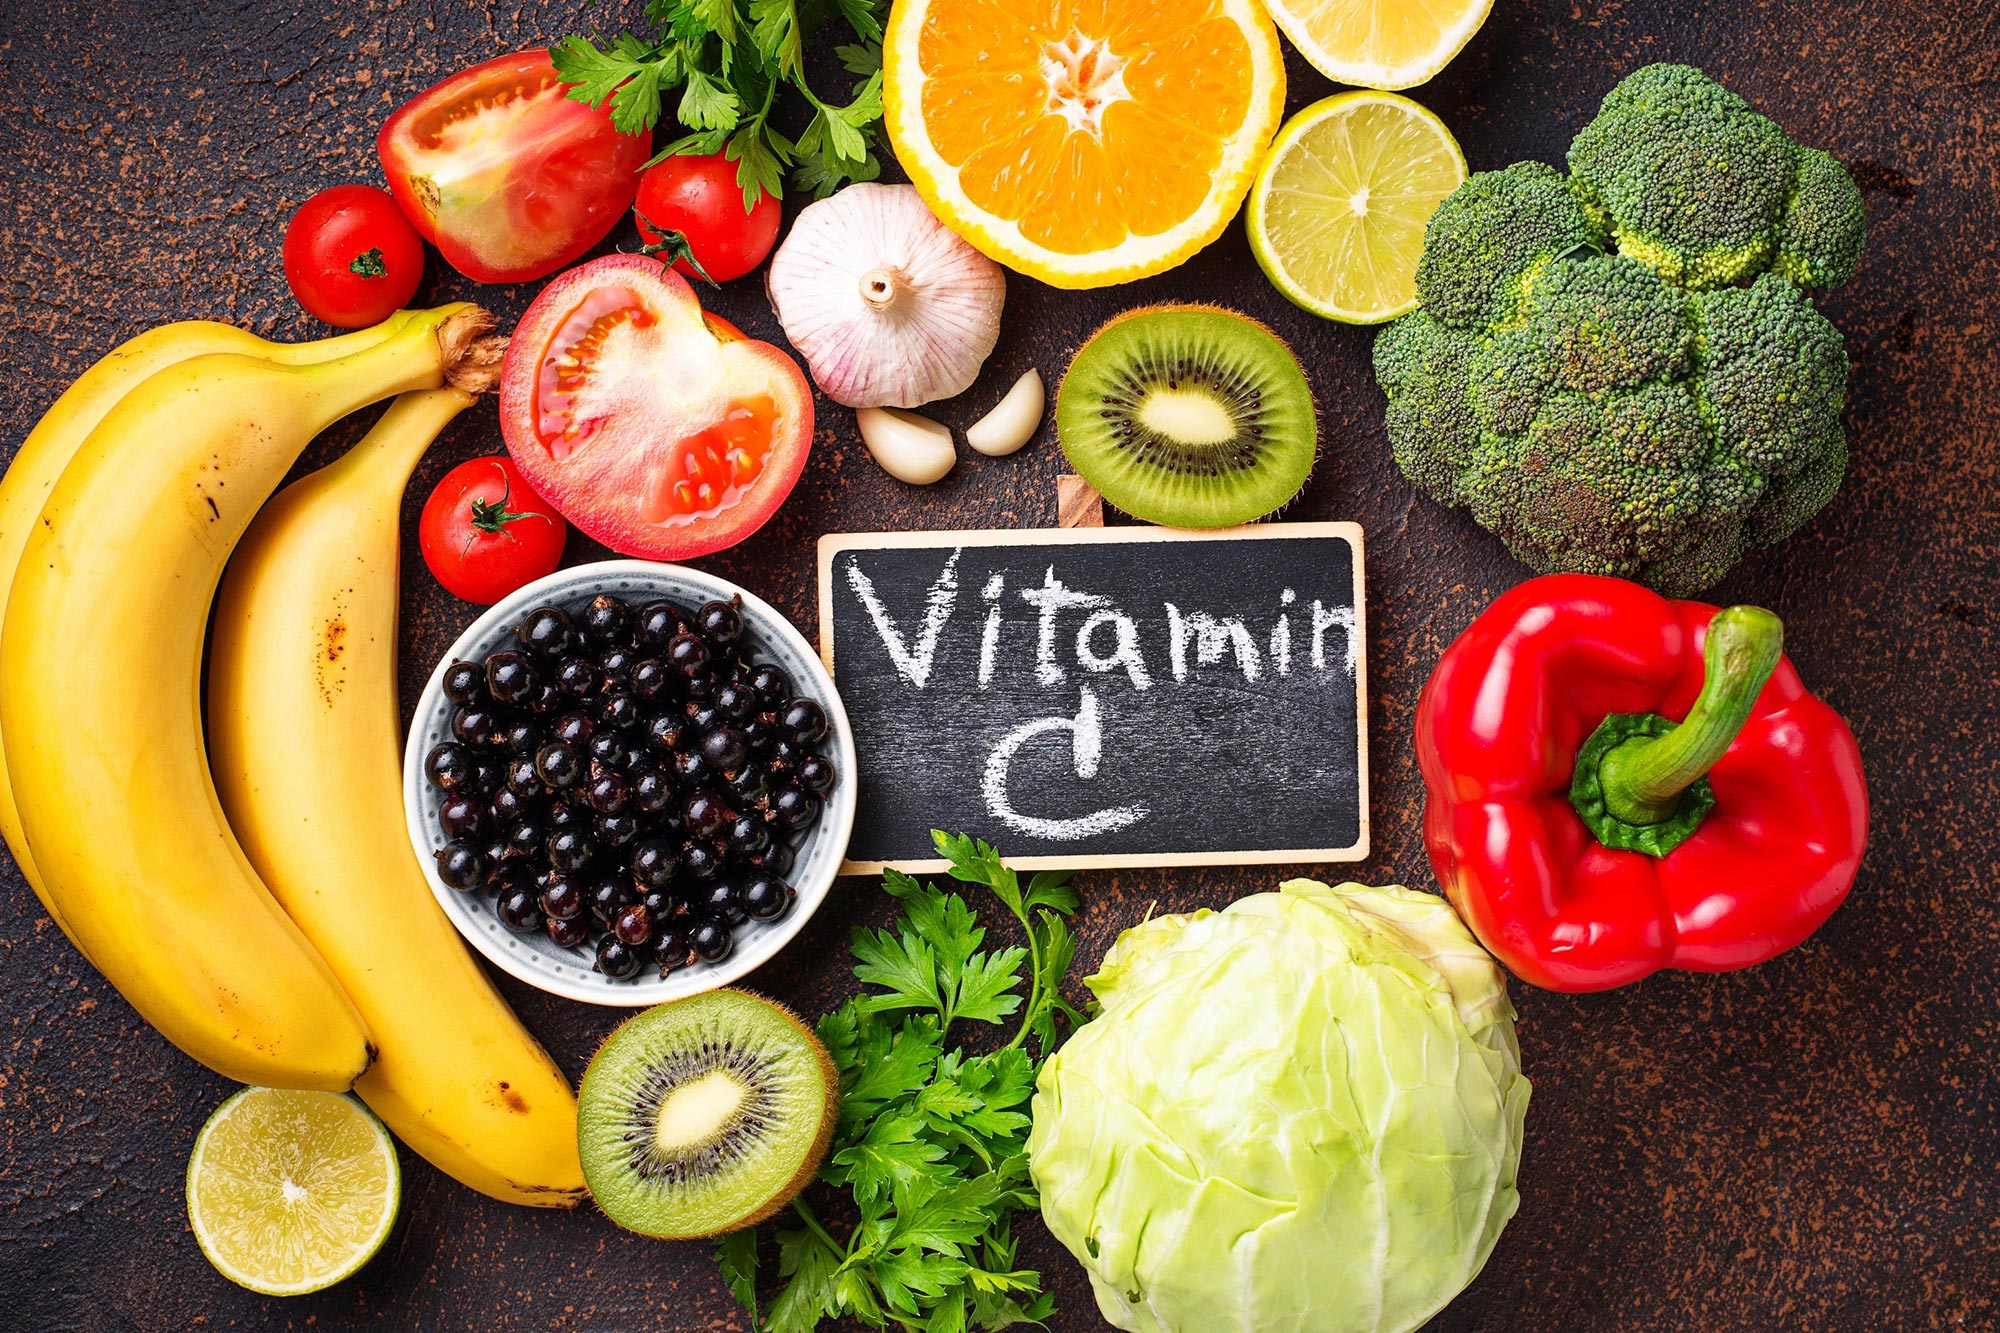 You May Need More Vitamin C – New Analysis of Landmark Scurvy Study ...